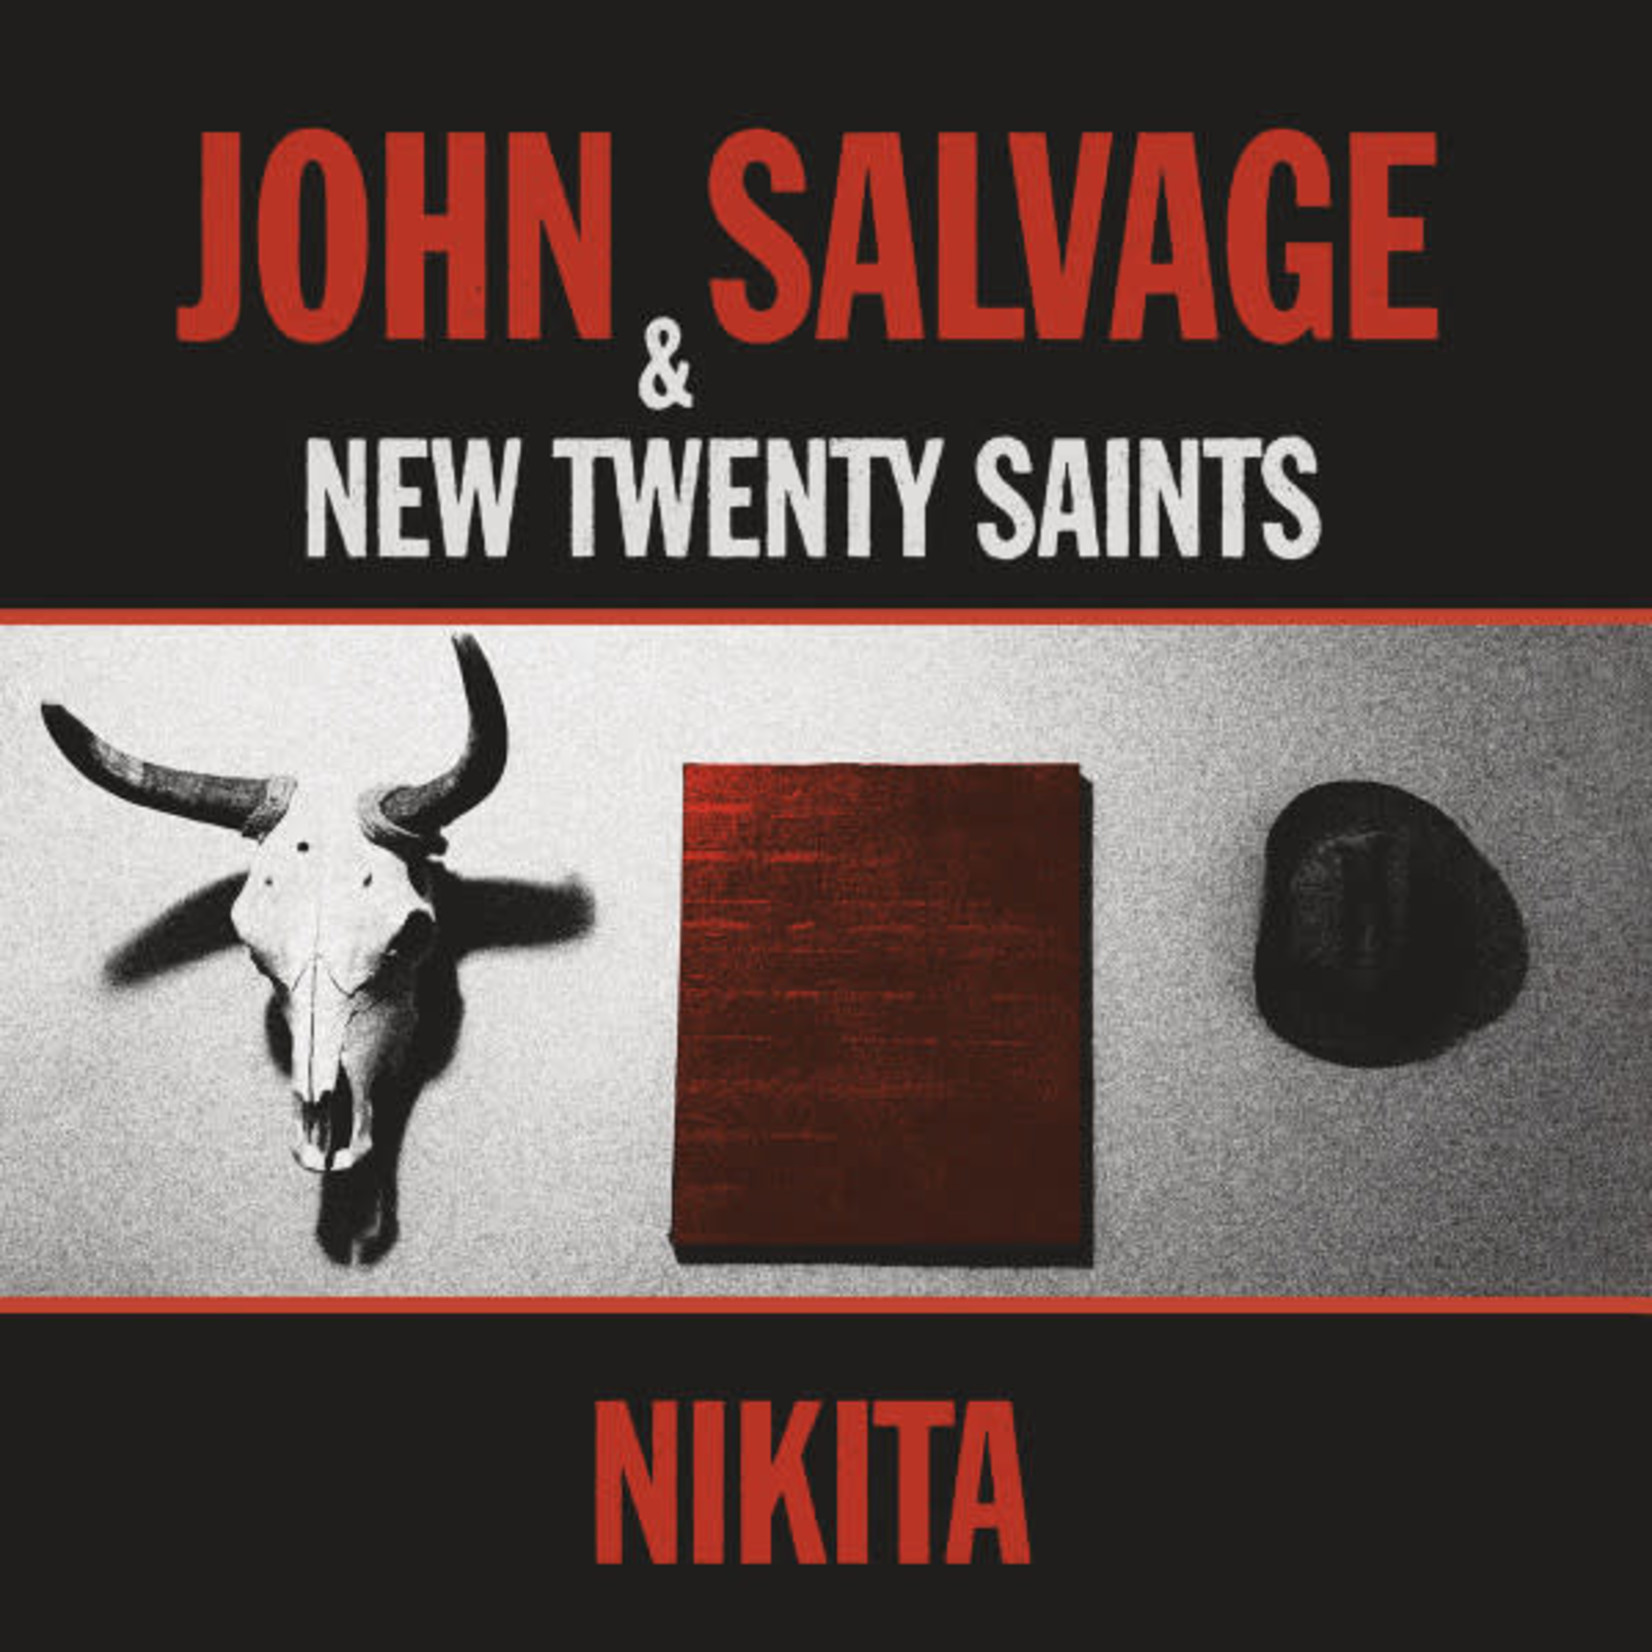 John Salvage & New Twenty Saints - Nikita (LP)